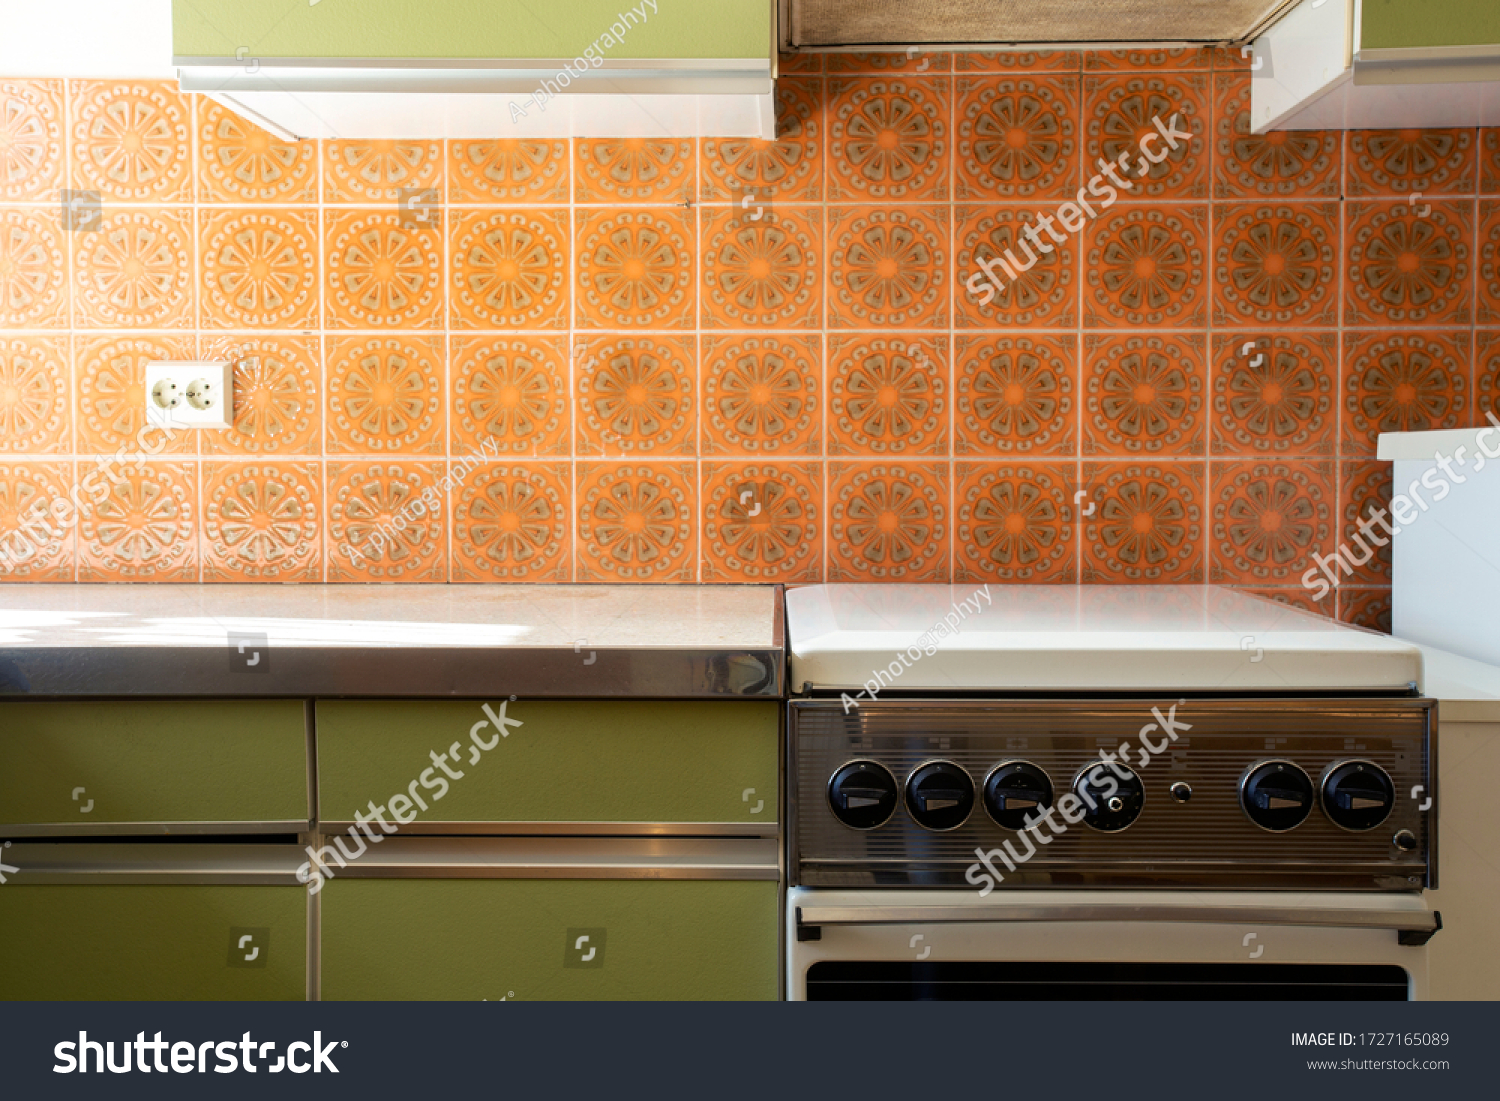 Vintage retro kitchen with orange pattern tiles, american retro kitchen home interior design 70's style close-up #1727165089